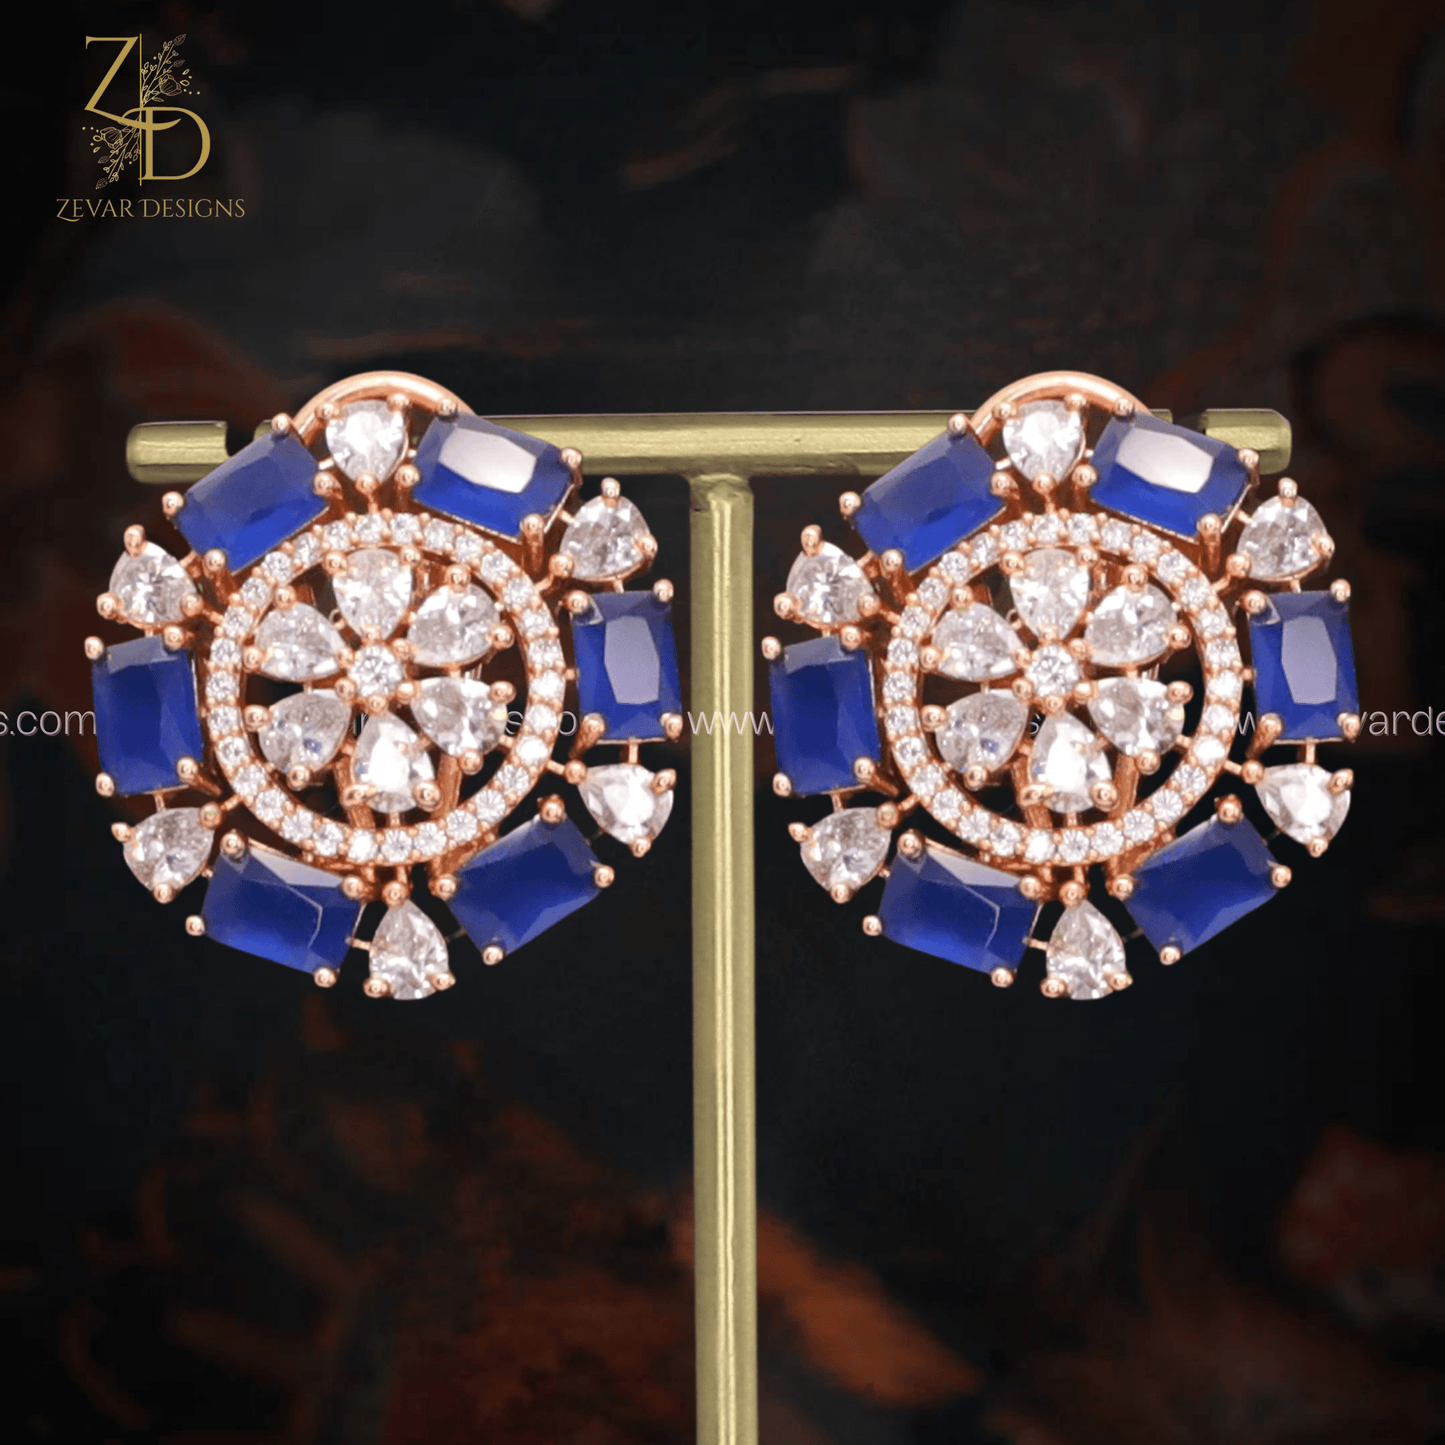 Zevar Designs Indo-Western Earrings Rose Gold AD/Zircon Studs - Blue